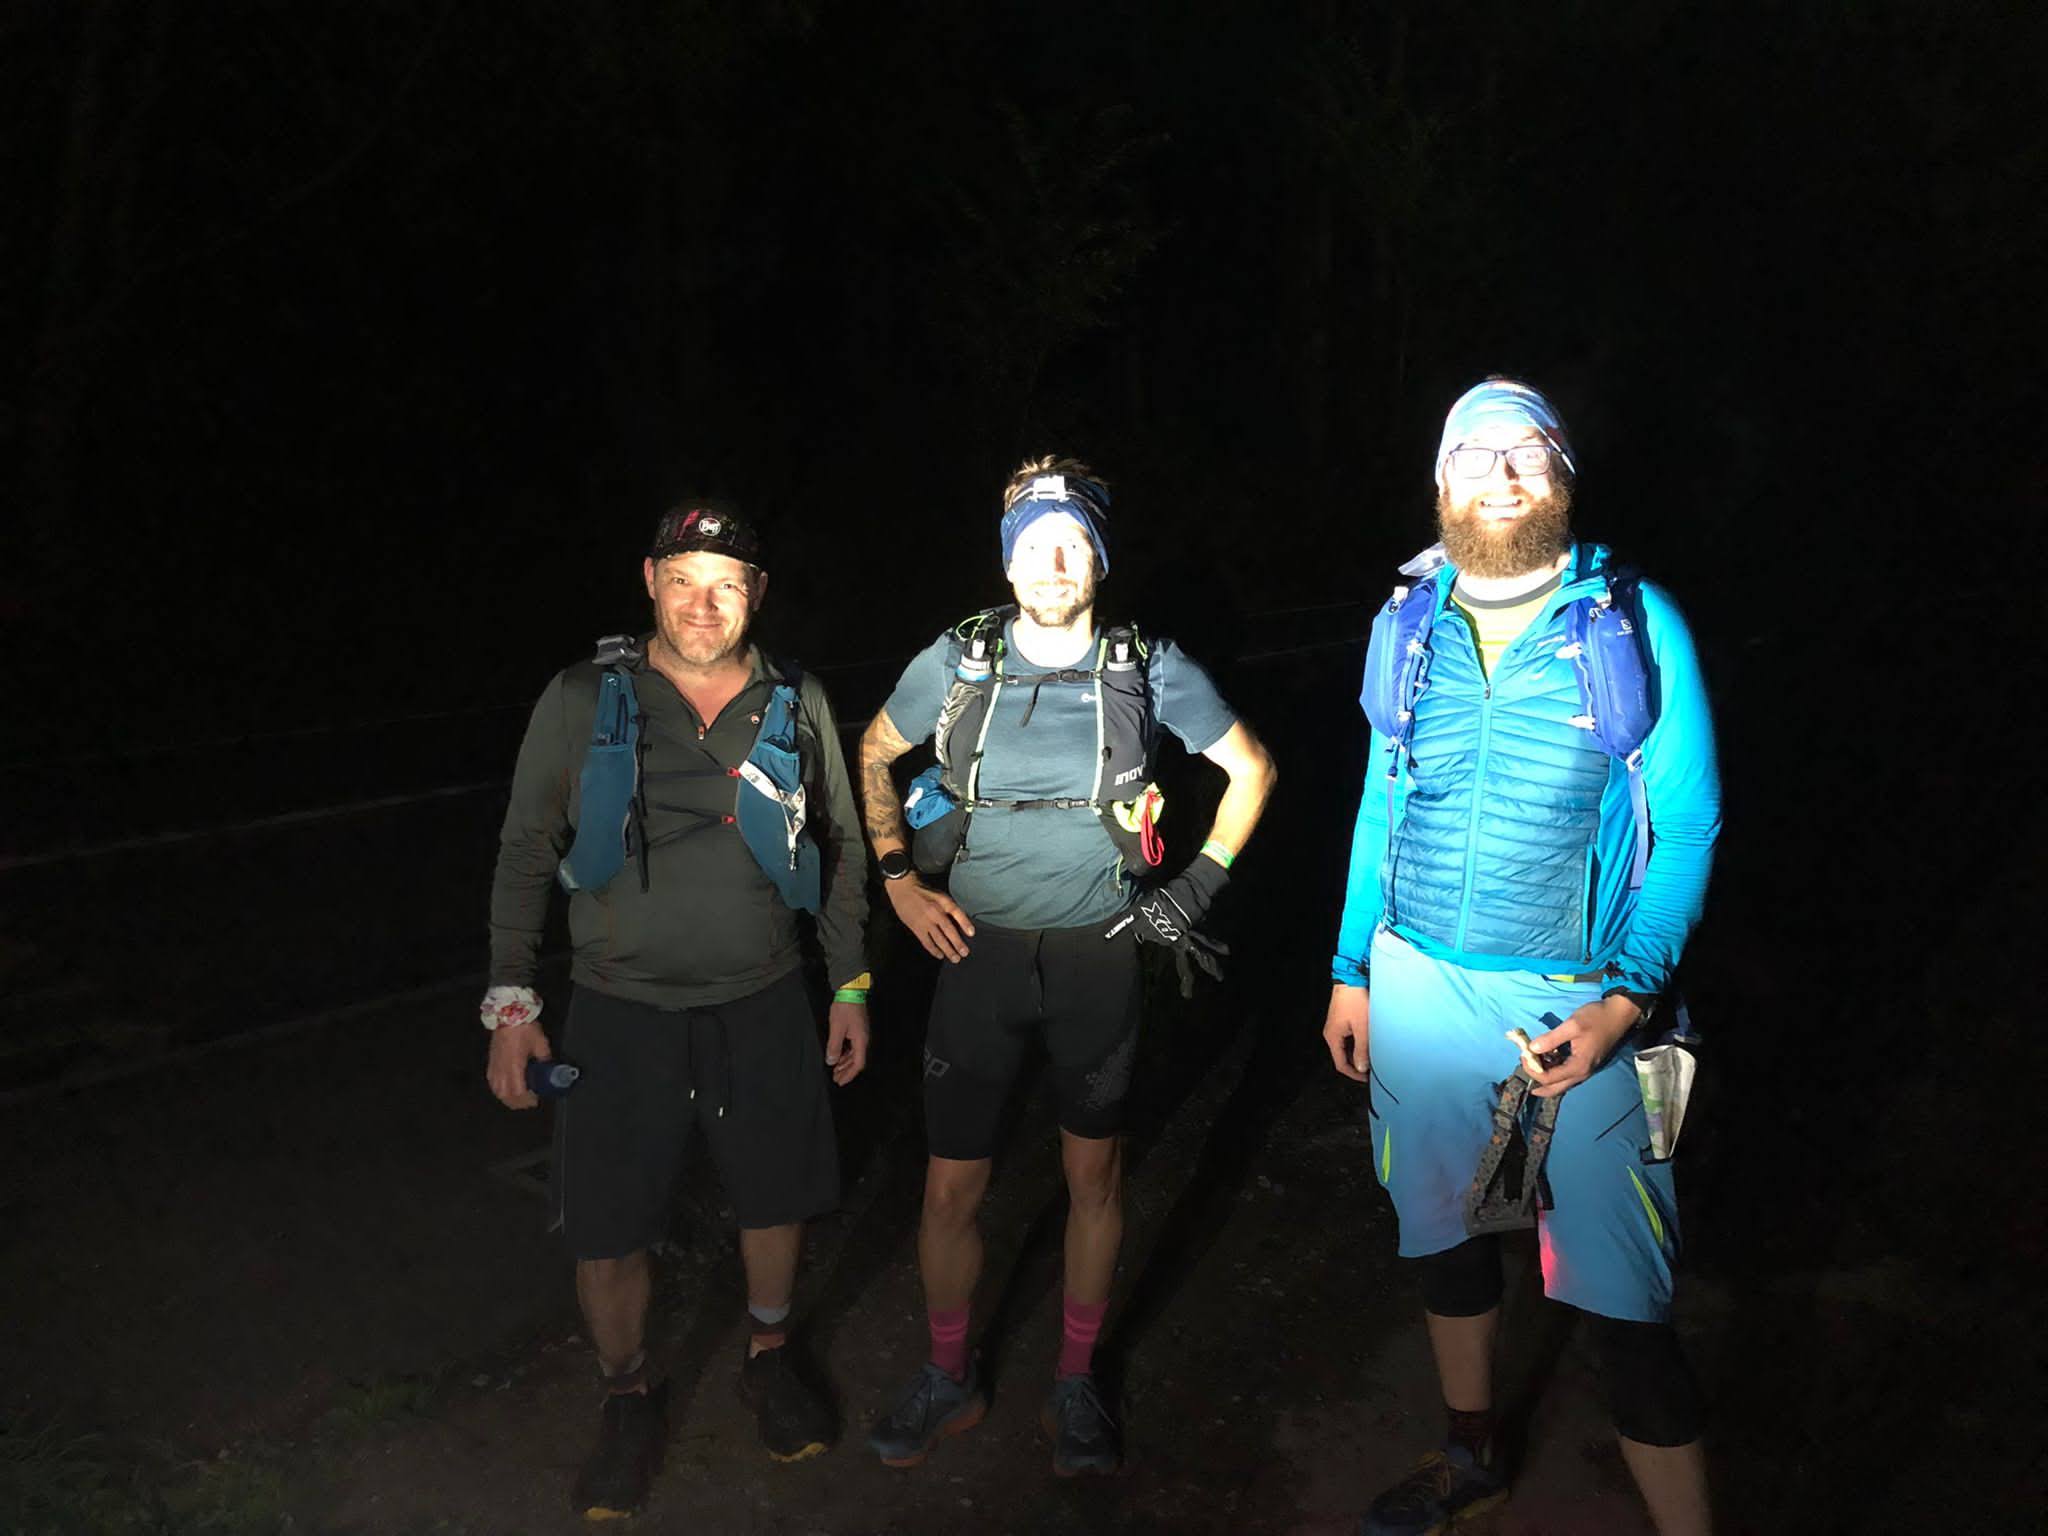 Back Before Dark 10km Fell Race - Peak District Challenge Wilderness Development